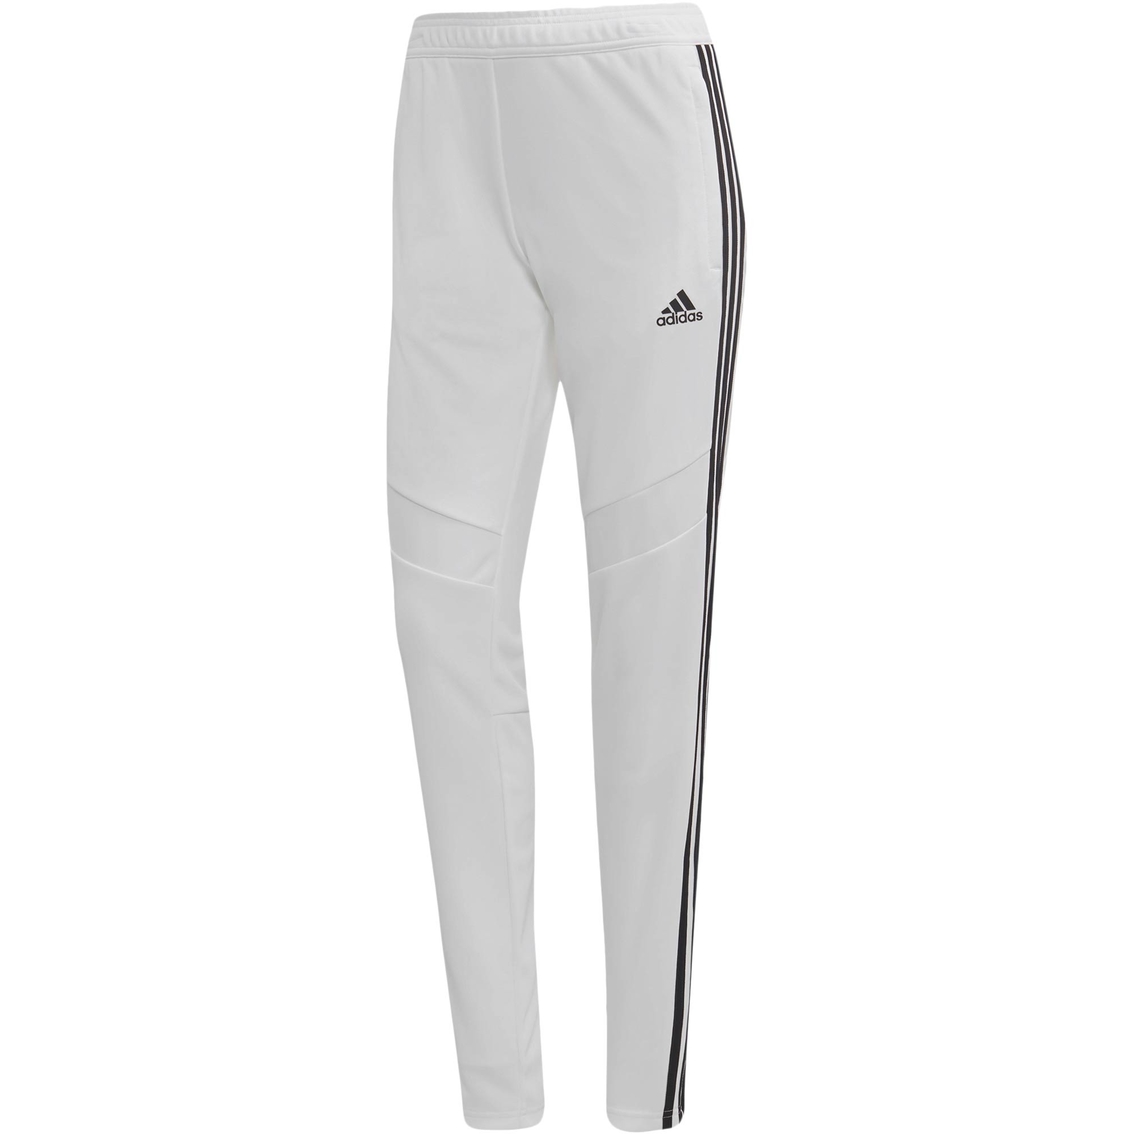 Adidas Tiro 19 Training Pants | Pants & Capris | Clothing & Accessories ...